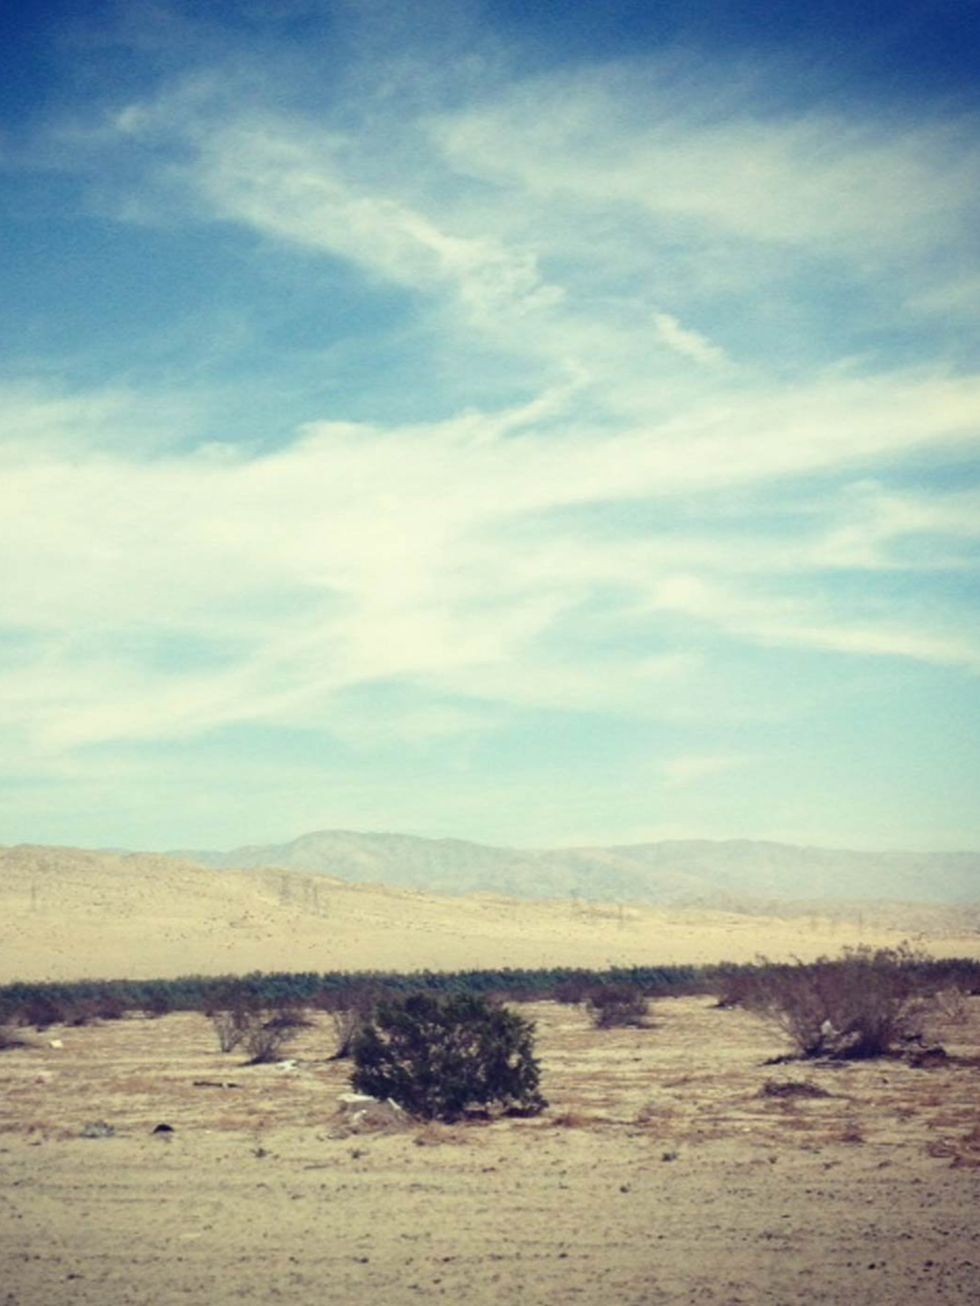 <p>The unforgettable drive to Coachella 2013 through the California desert.</p>